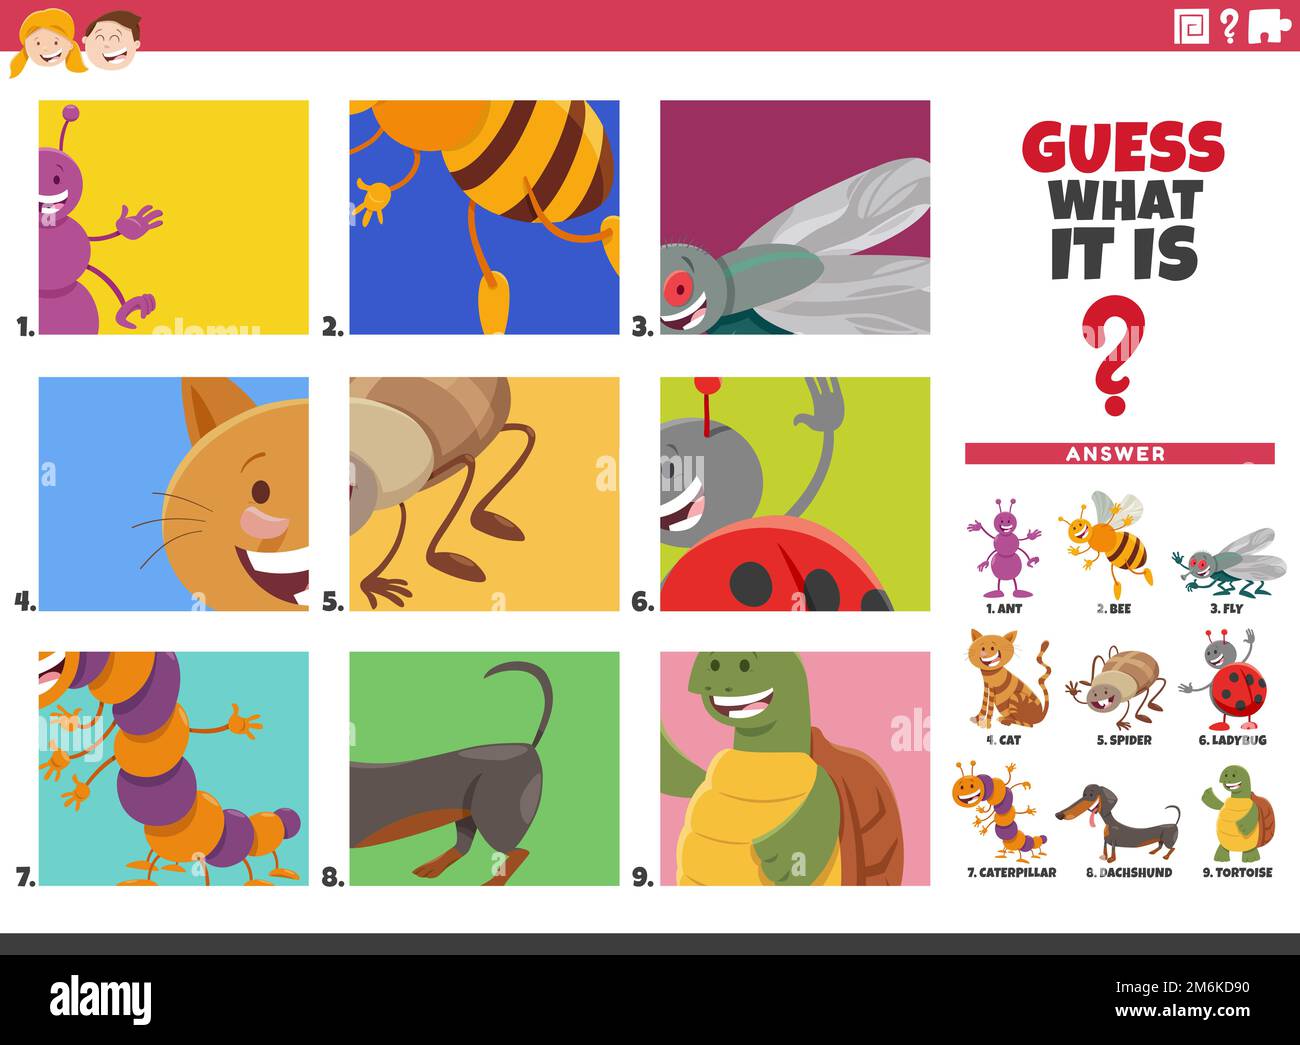 https://c8.alamy.com/comp/2M6KD90/guess-cartoon-animal-characters-educational-game-2M6KD90.jpg